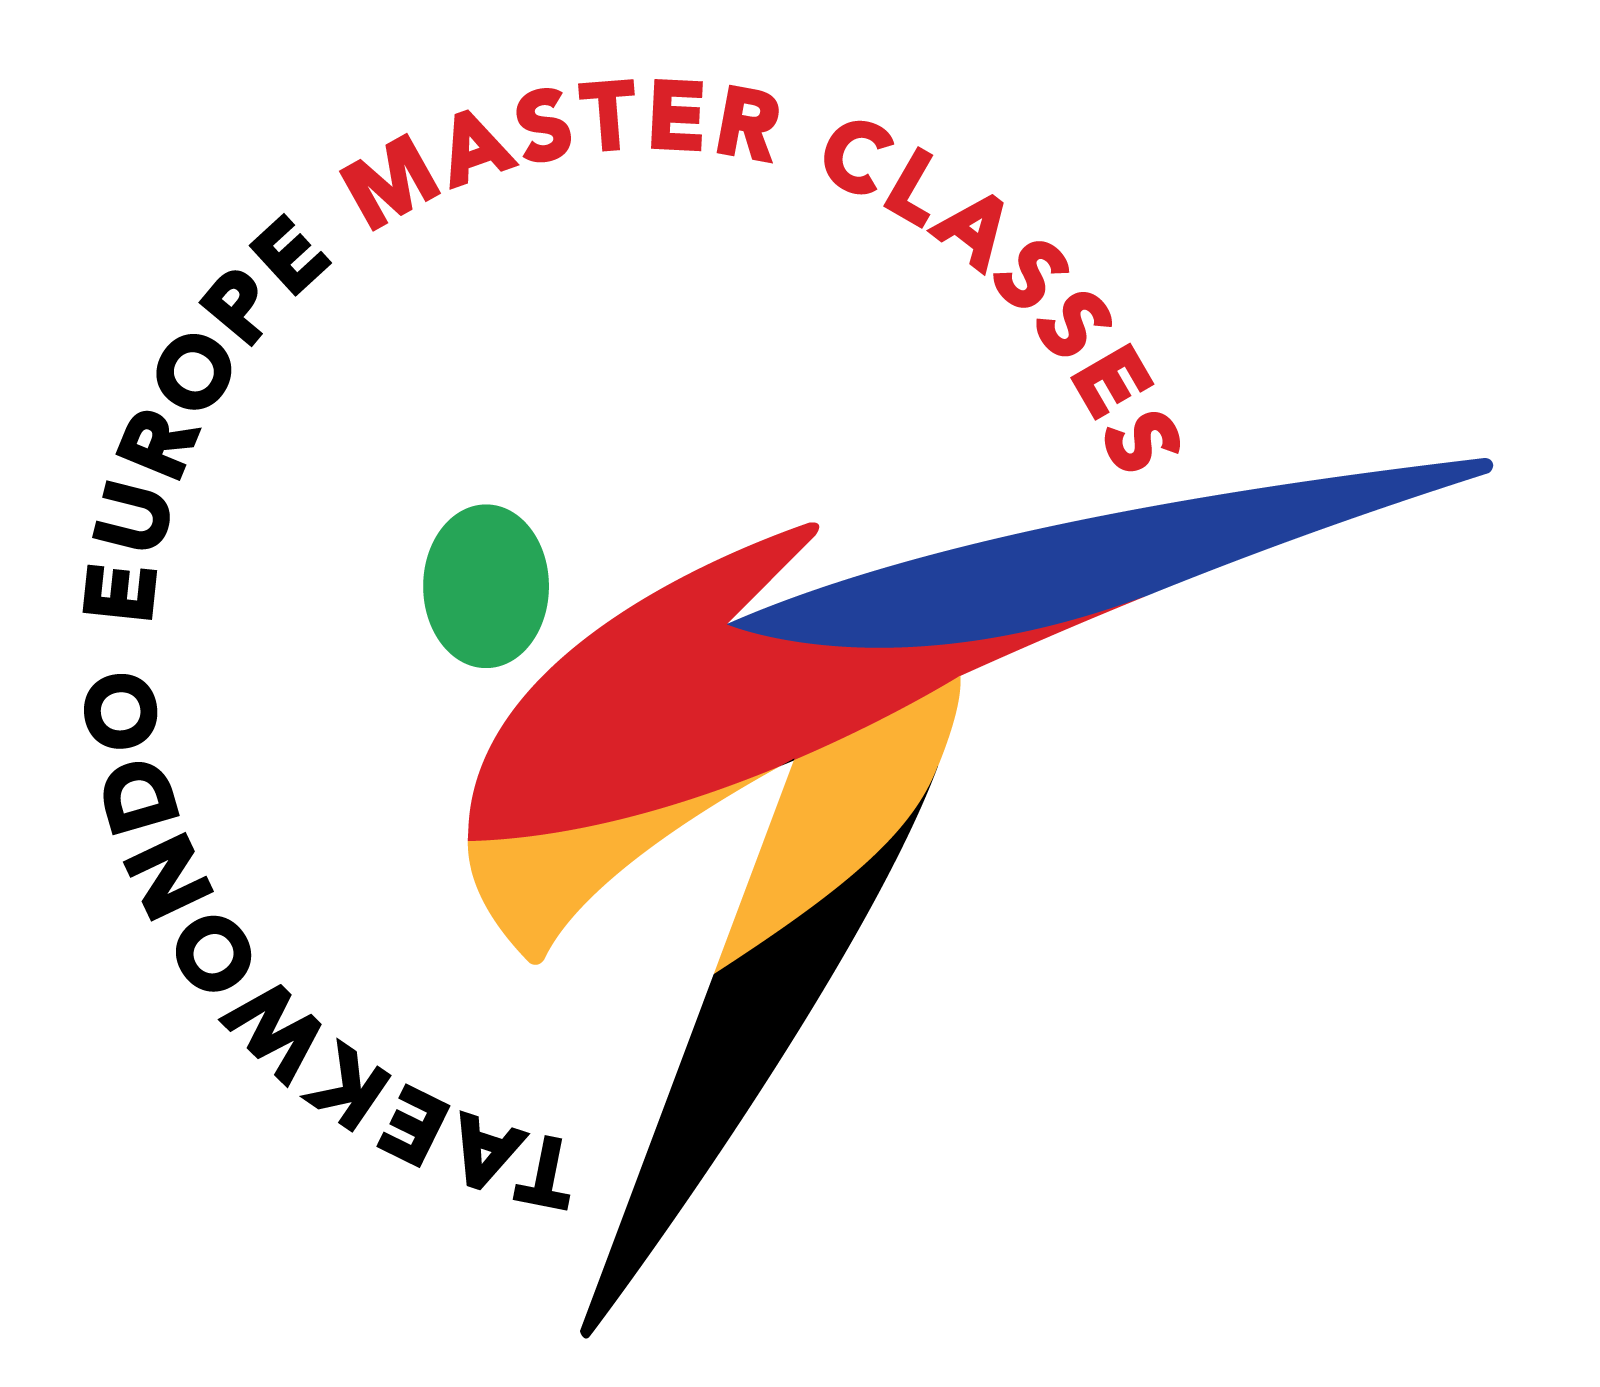 World Taekwondo Europe announce details of master class educational series